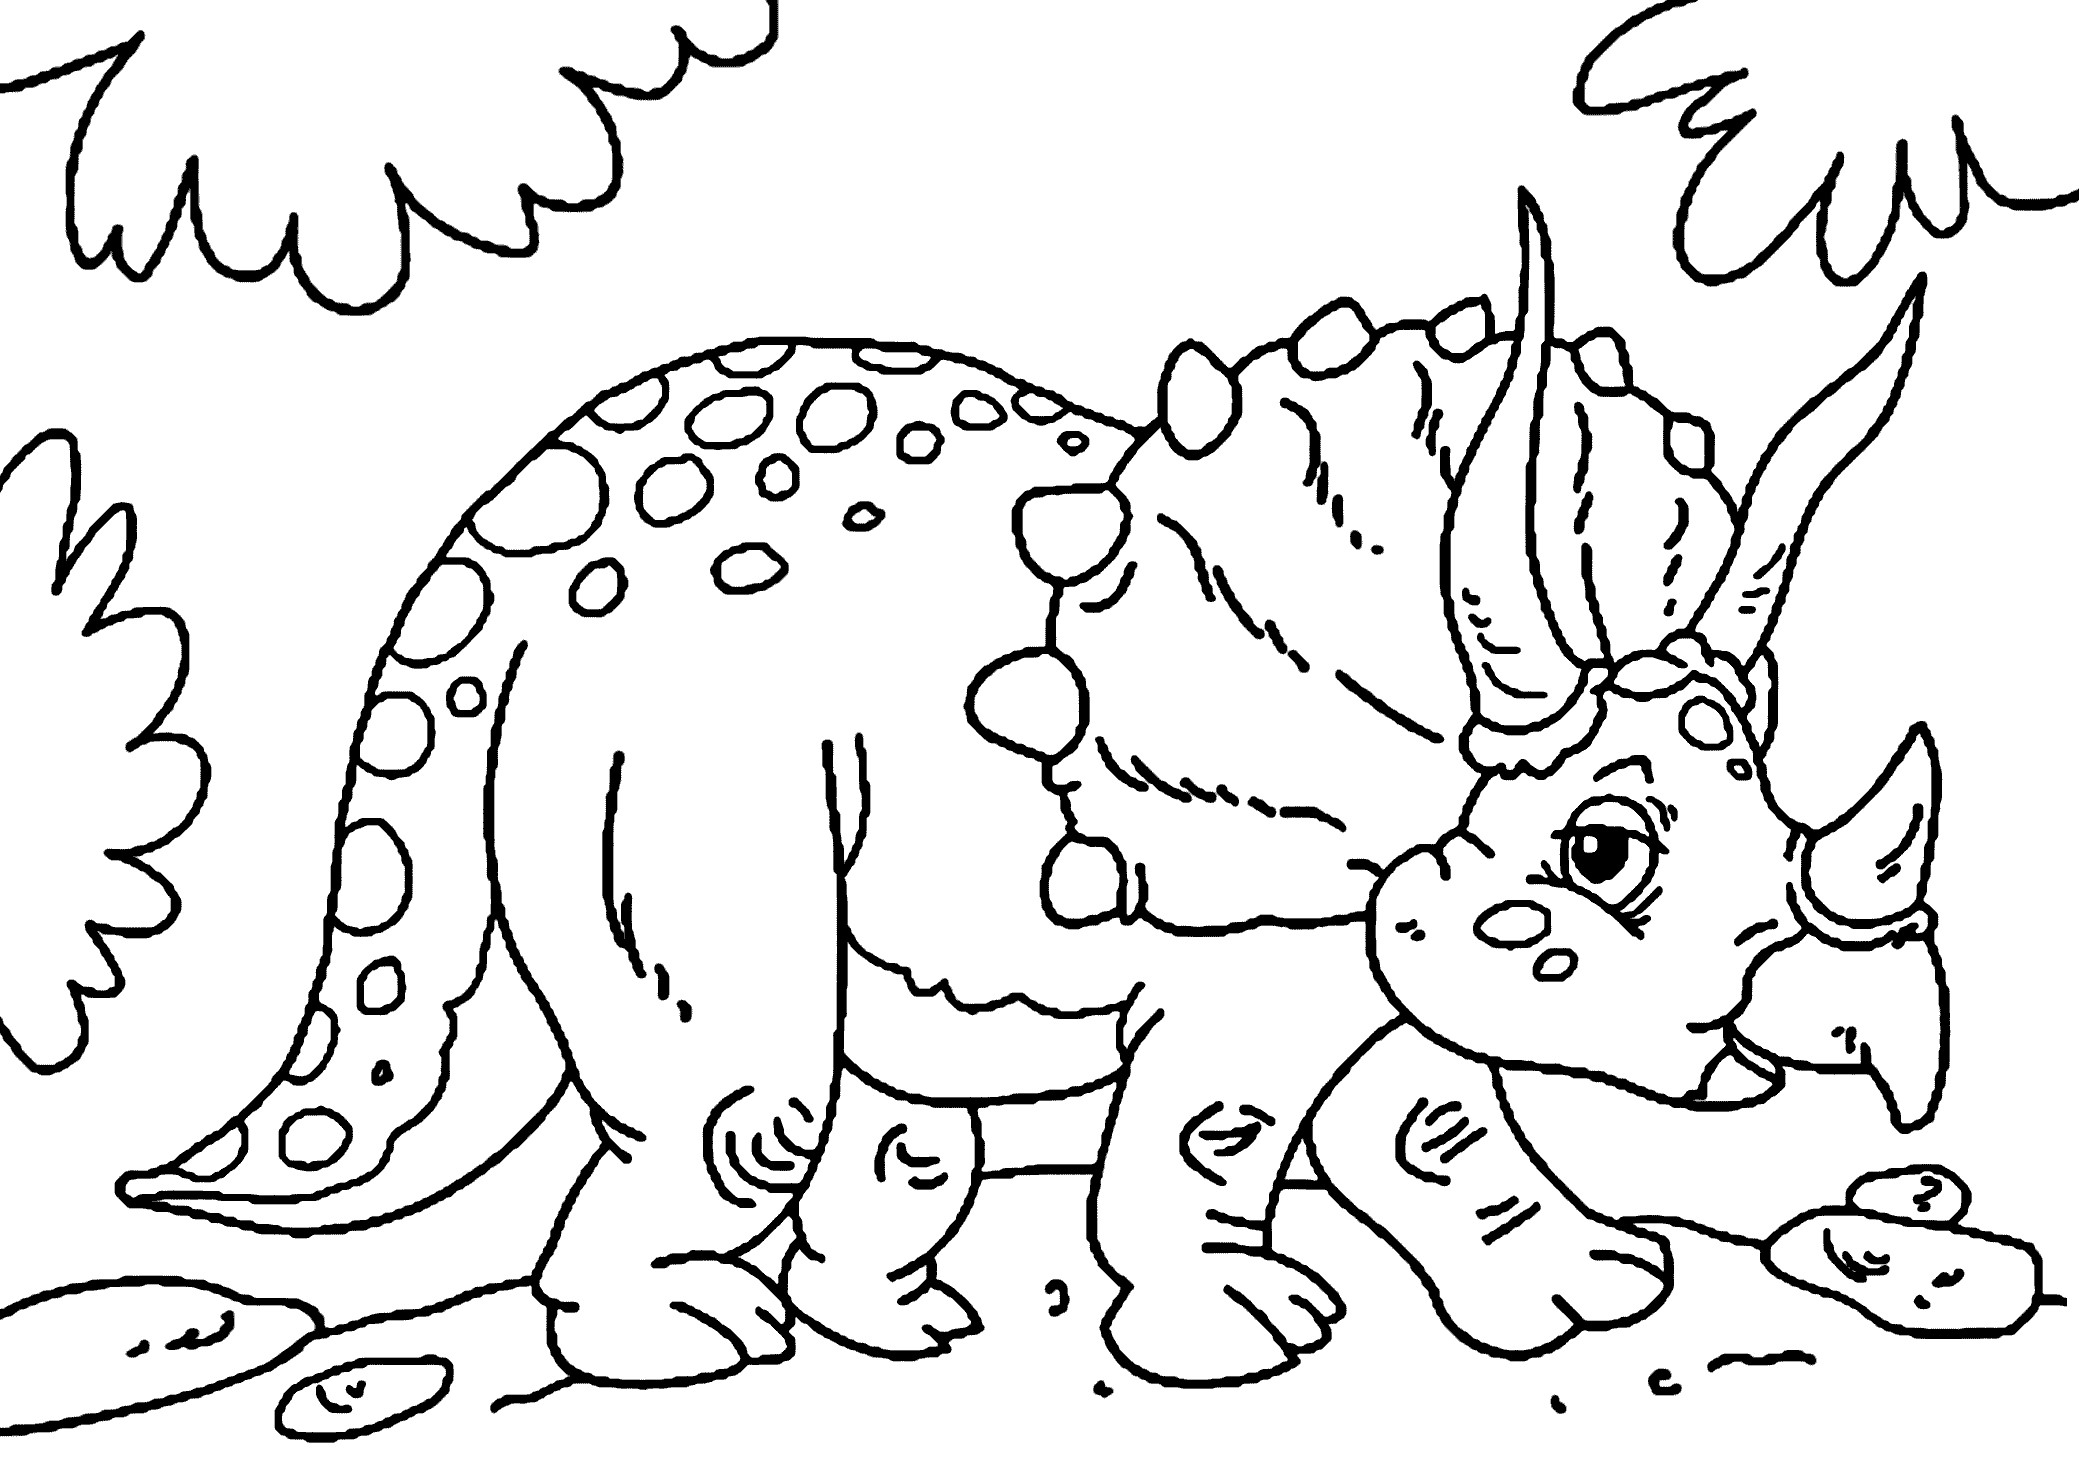 Kids Coloring Pages Dinosaur
 Cute little triceratops dinosaur coloring pages for kids